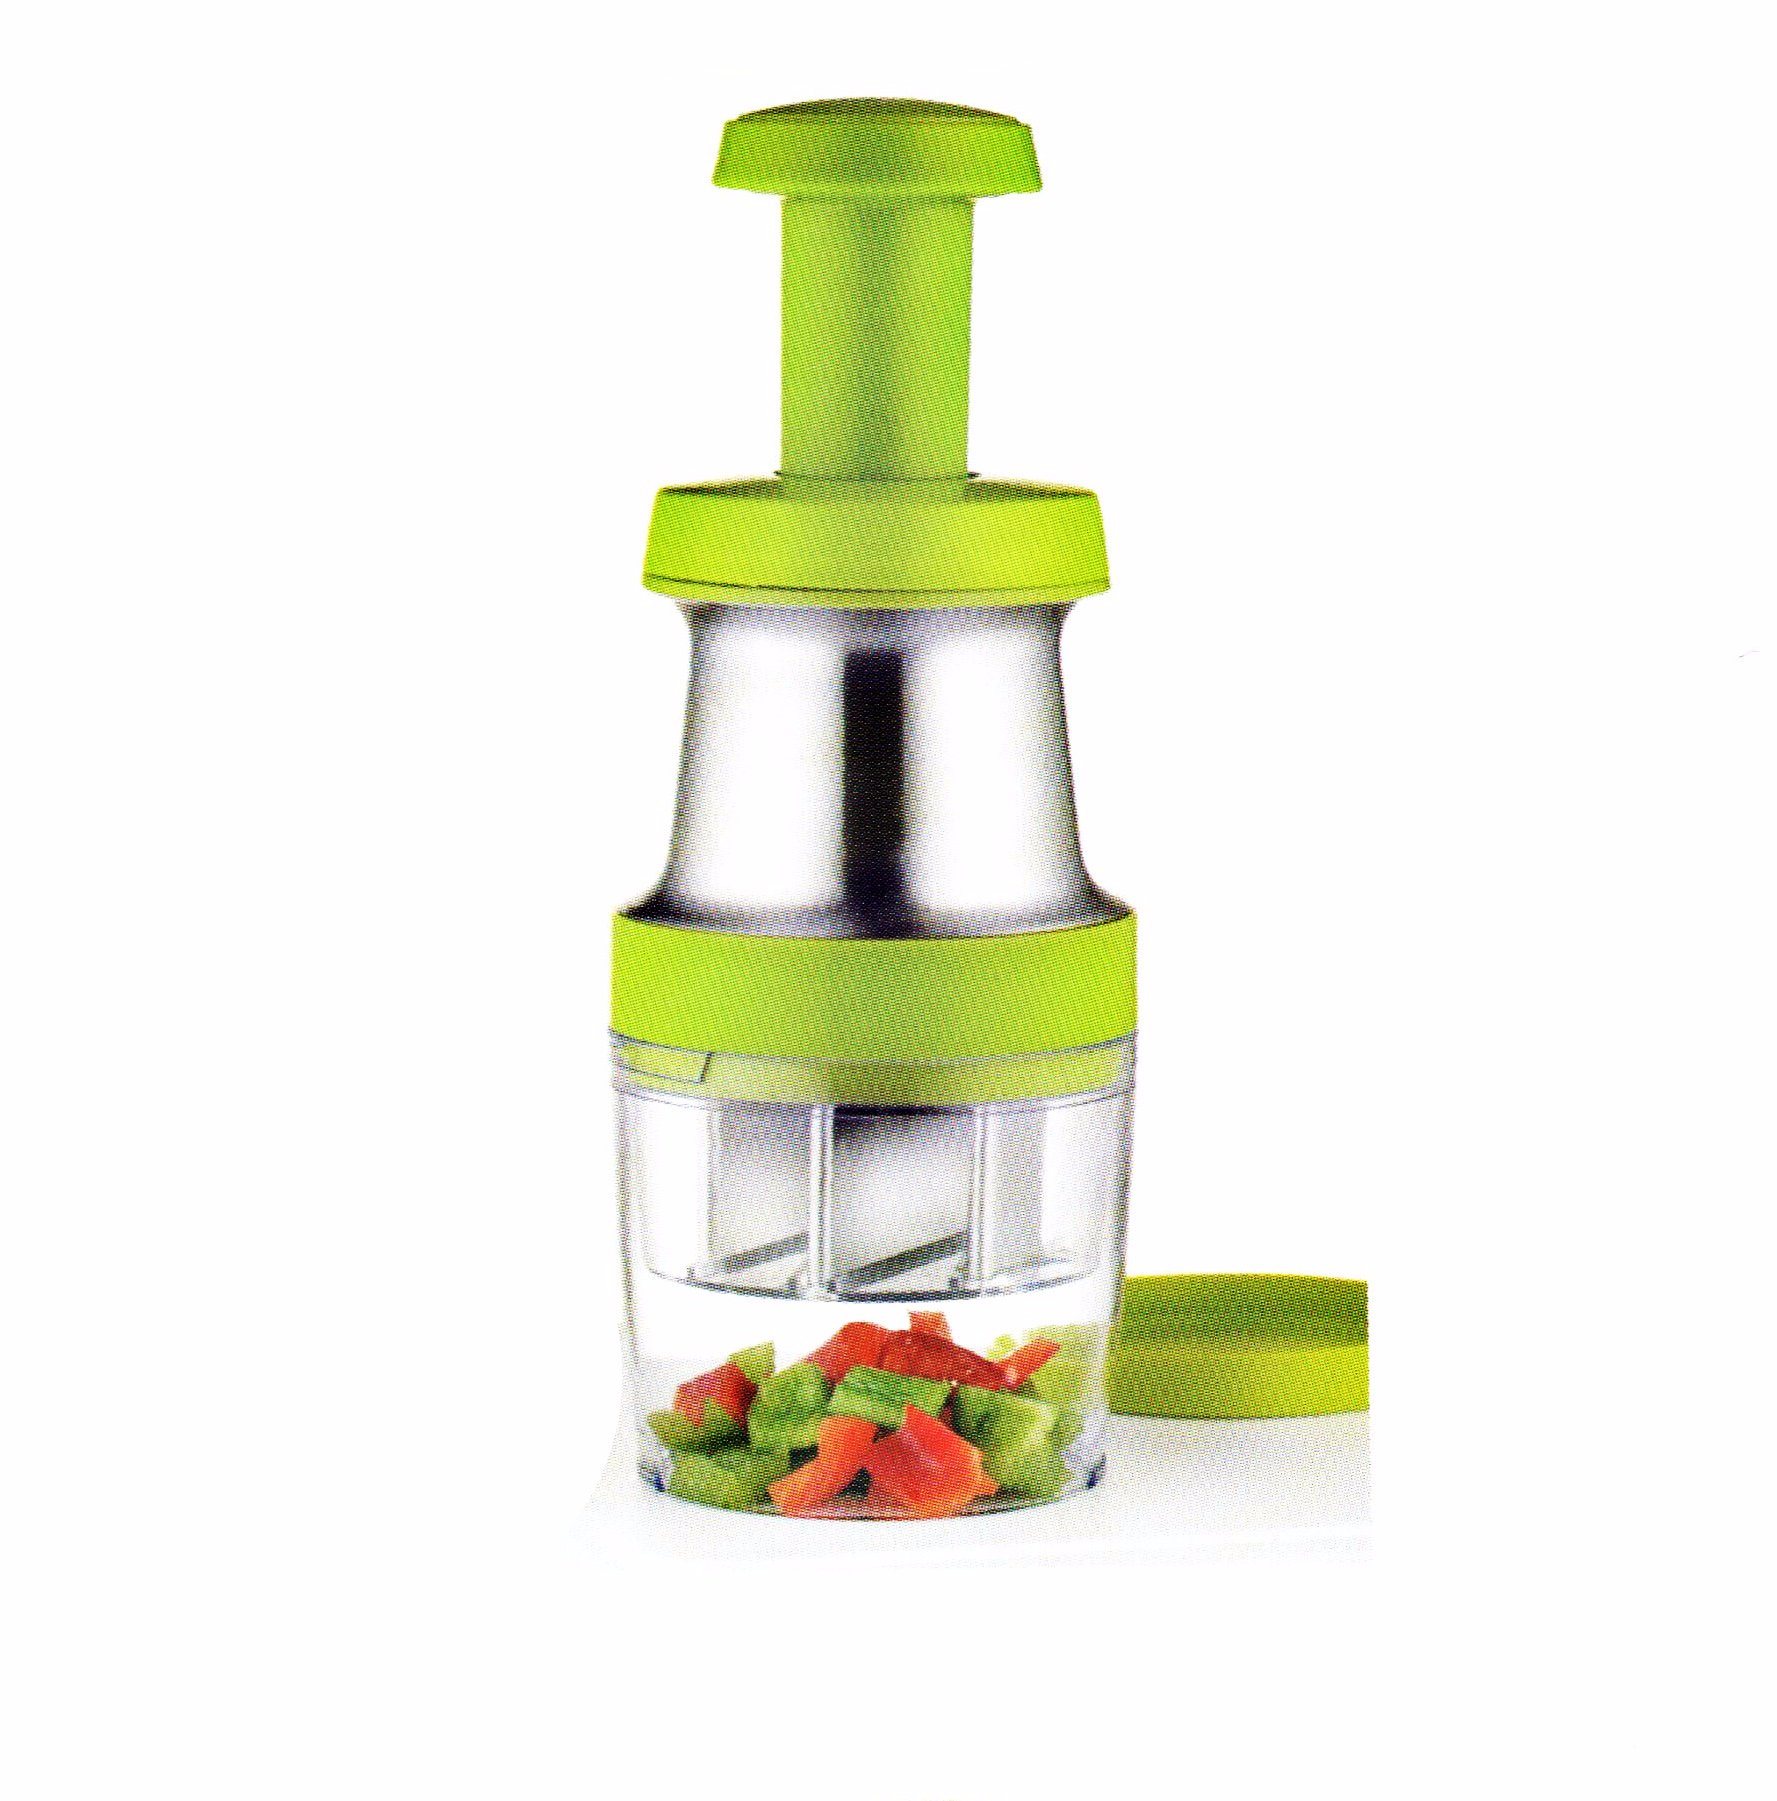 China Supplier Single Cup Coffee Maker -
 Home Appliance Plastic Food Processor Vegetable Food Chopper Cutting Machine Cg033 – Long Prosper